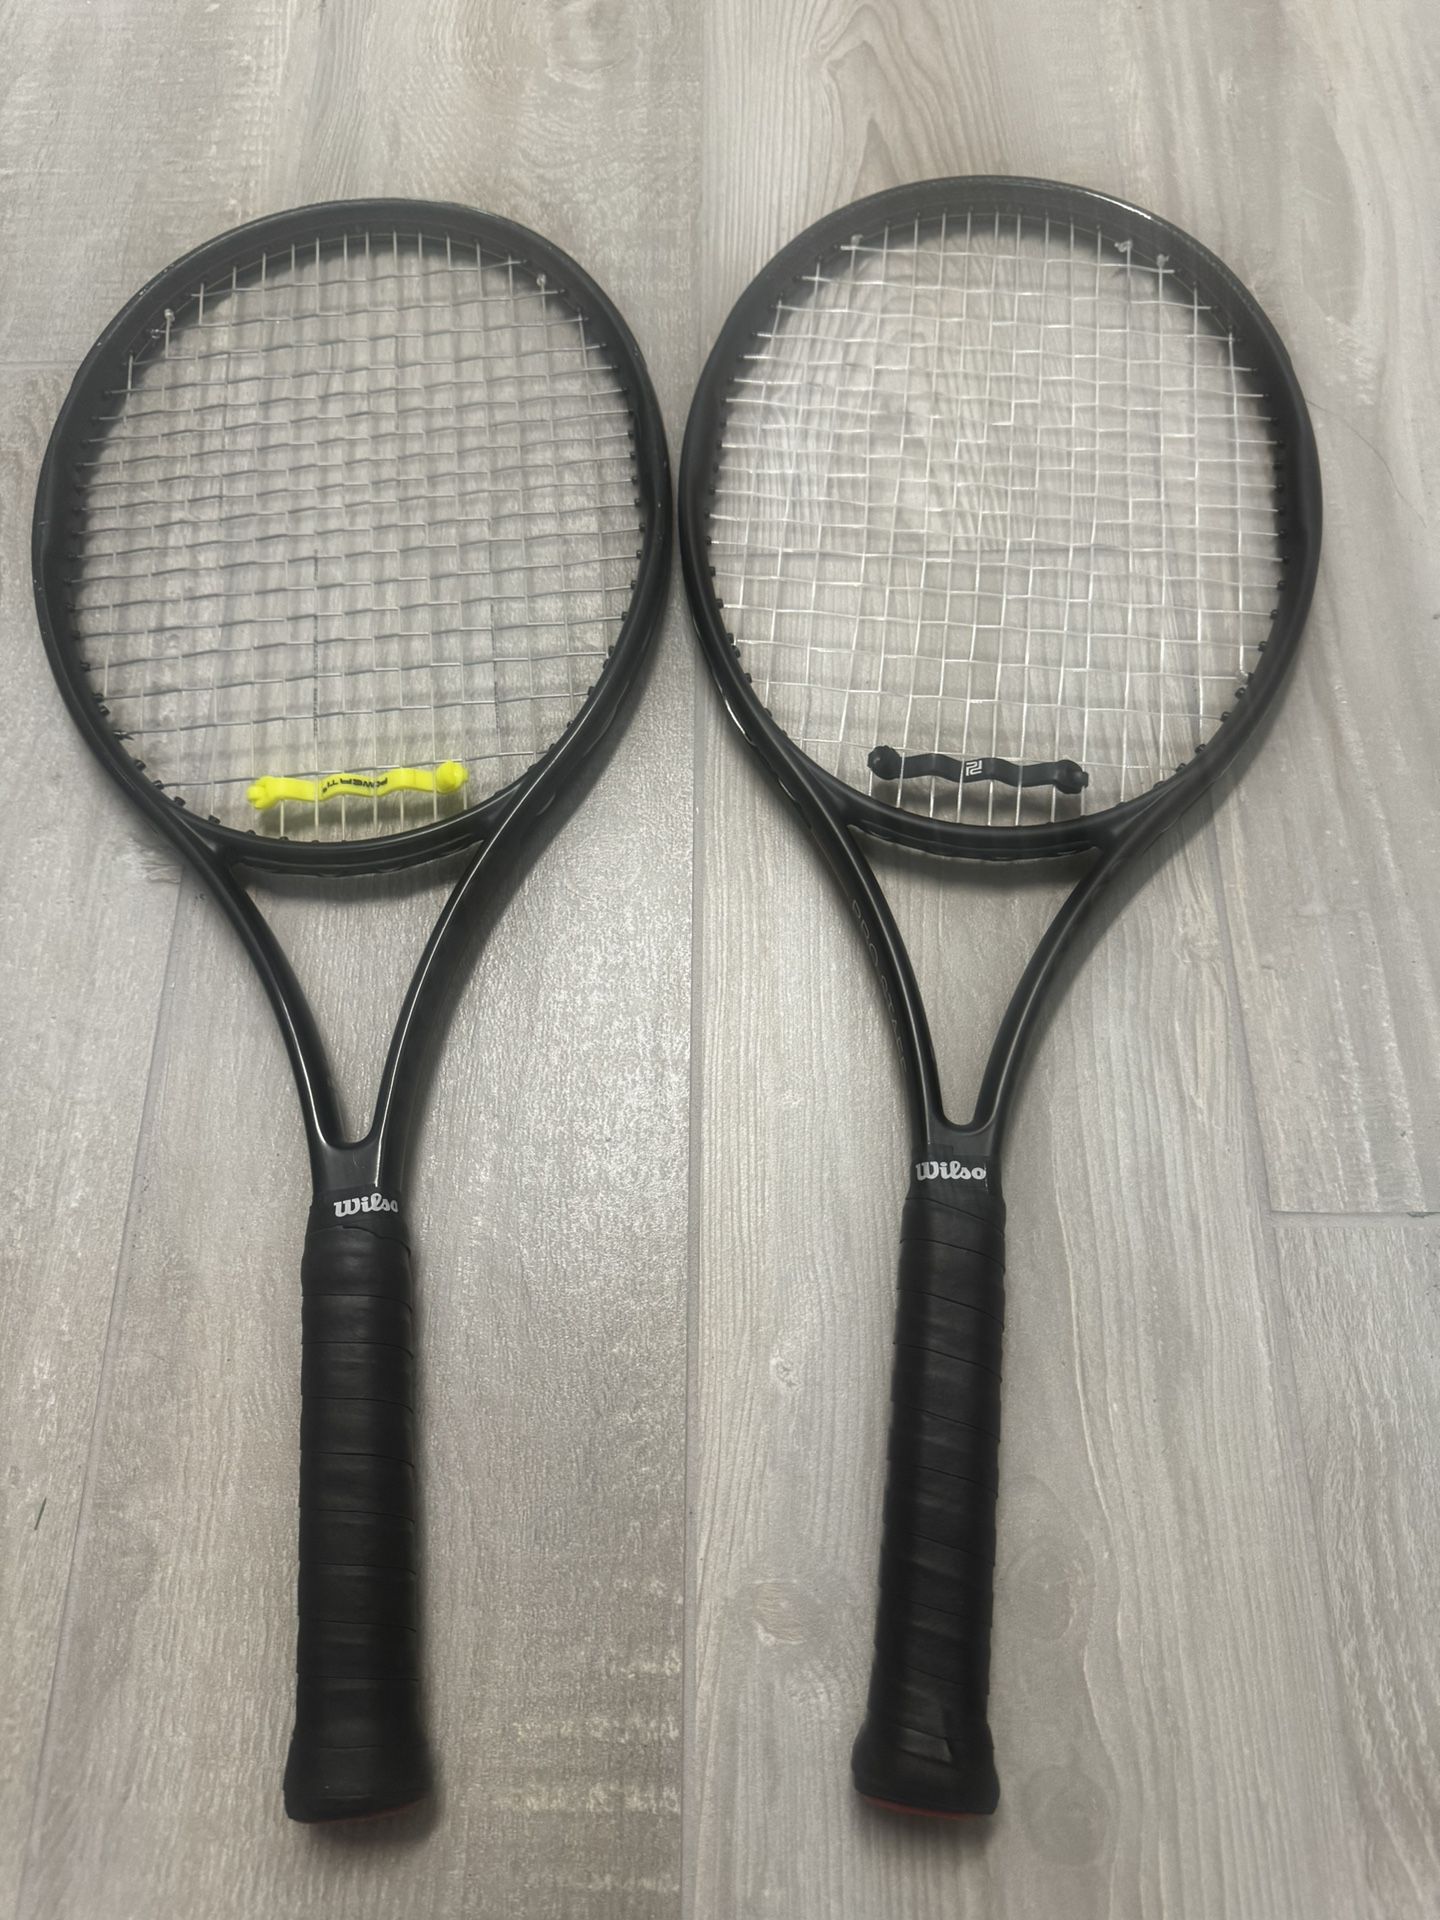 One New & Used Wilson PROSTAFF Tennis Racquets / Racket 